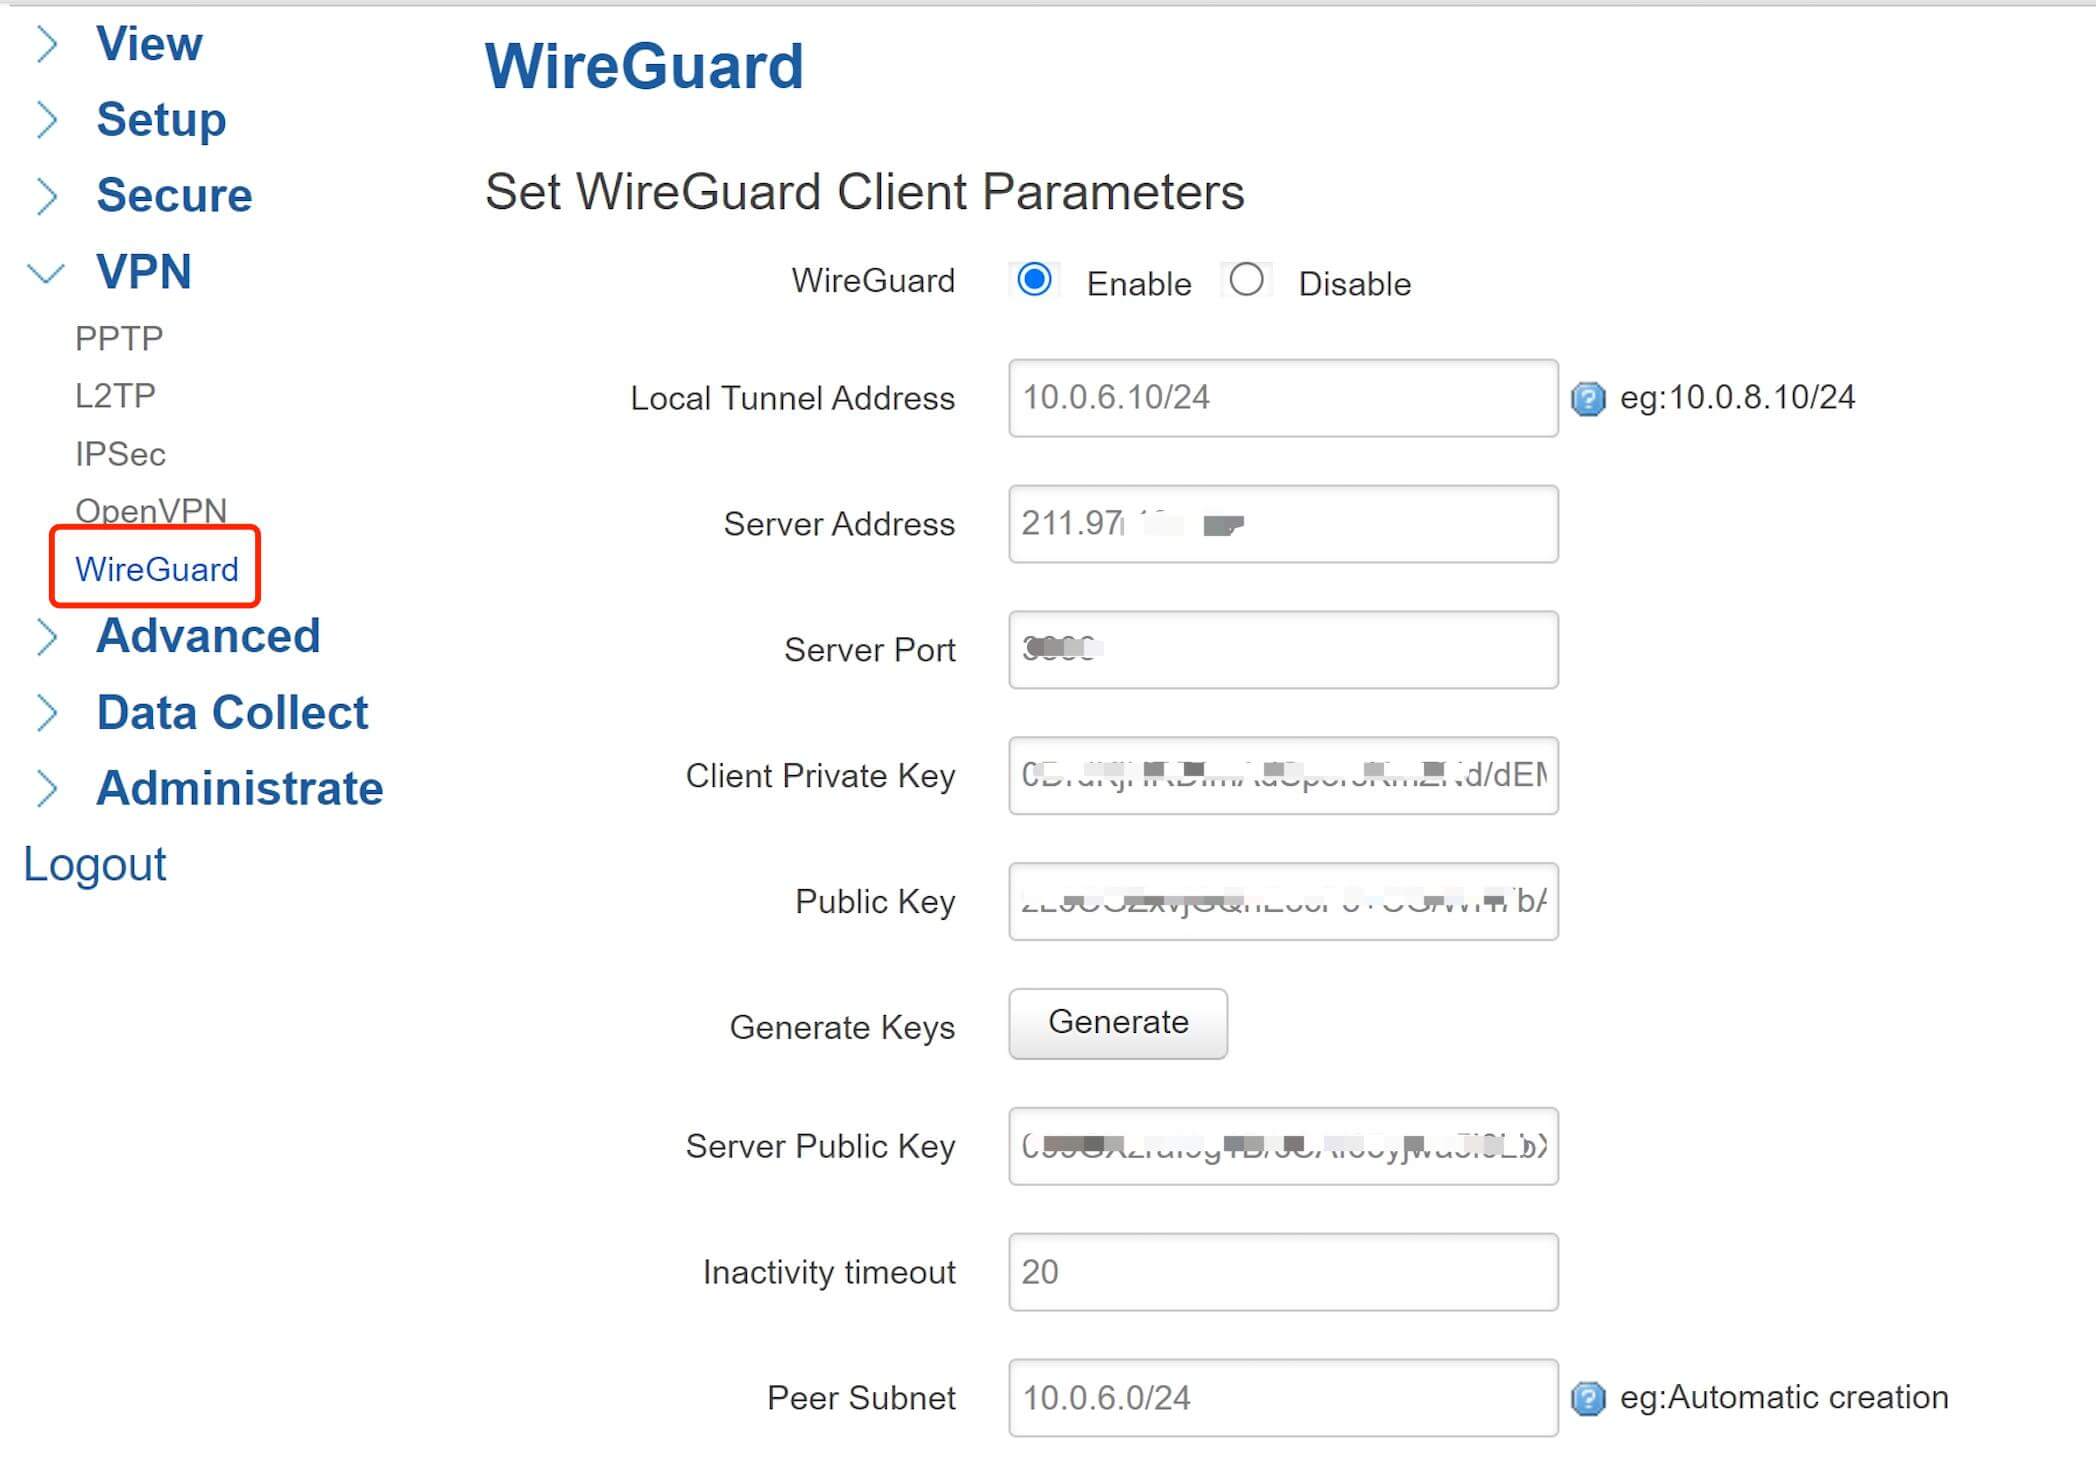 wireguard